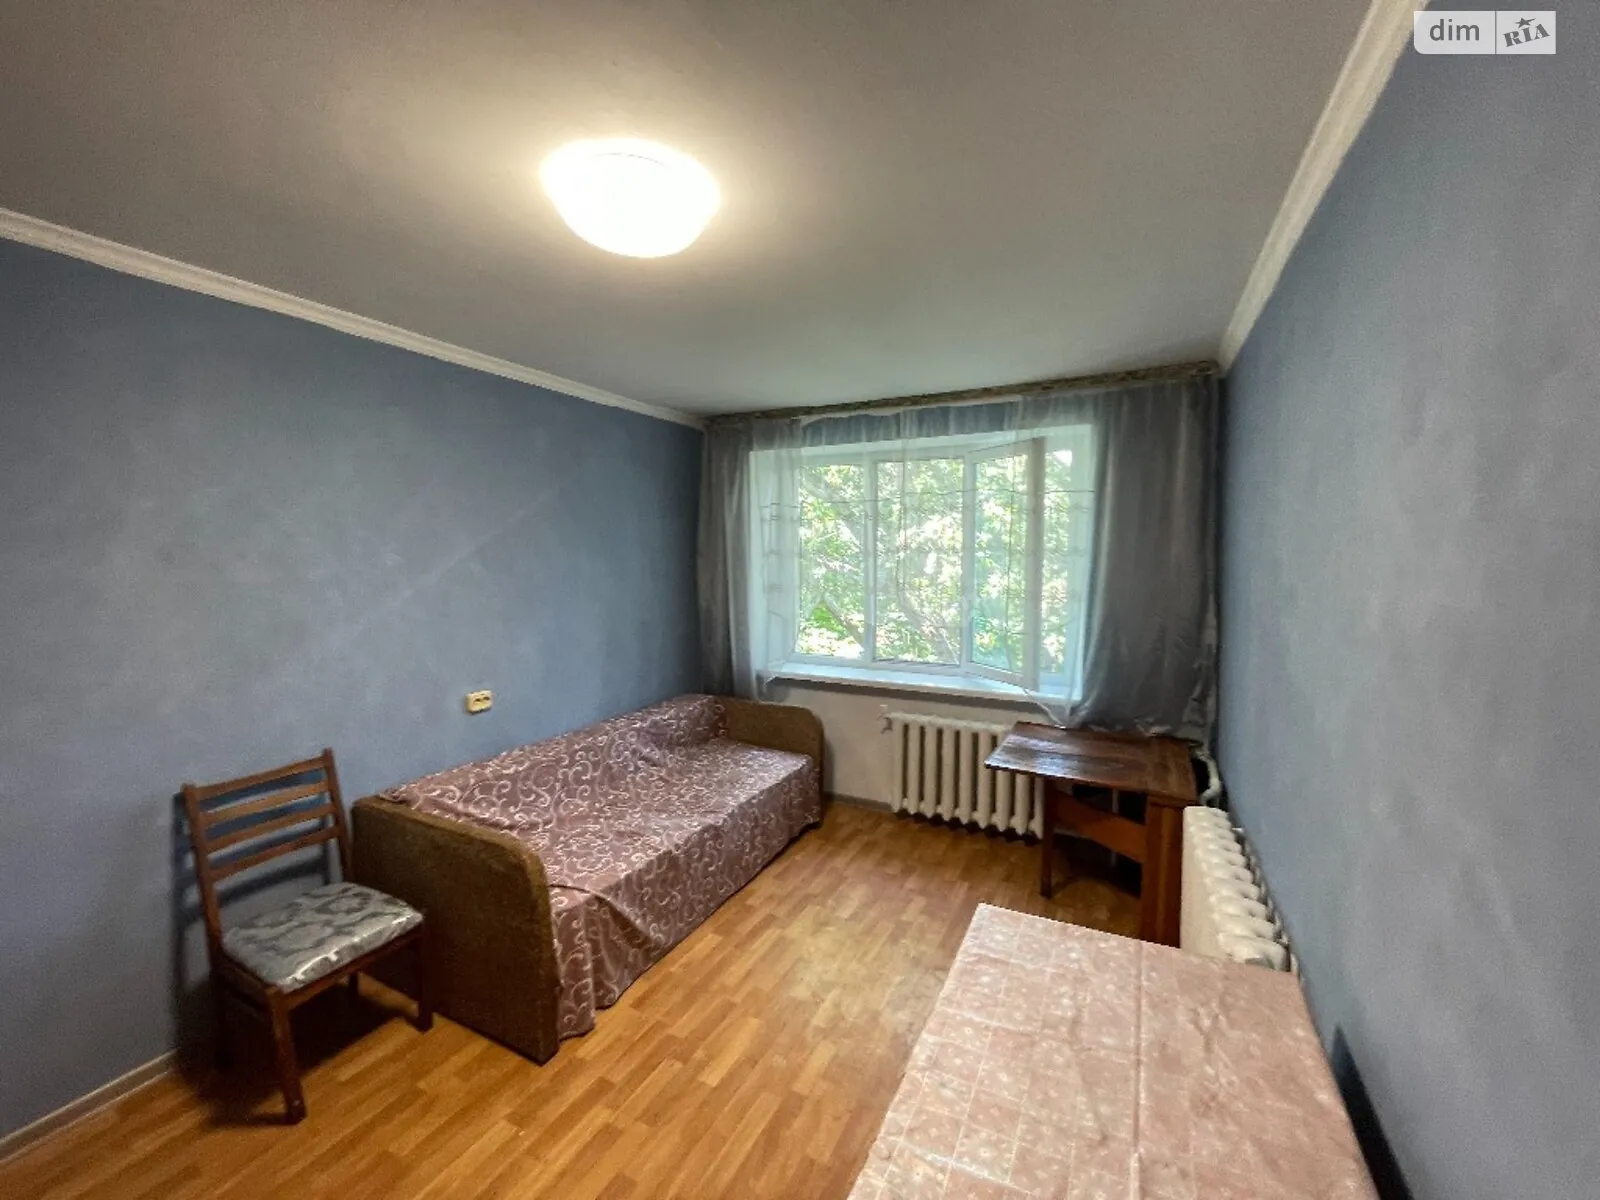 Продается комната 17 кв. м в Одессе, цена: 11000 $ - фото 1